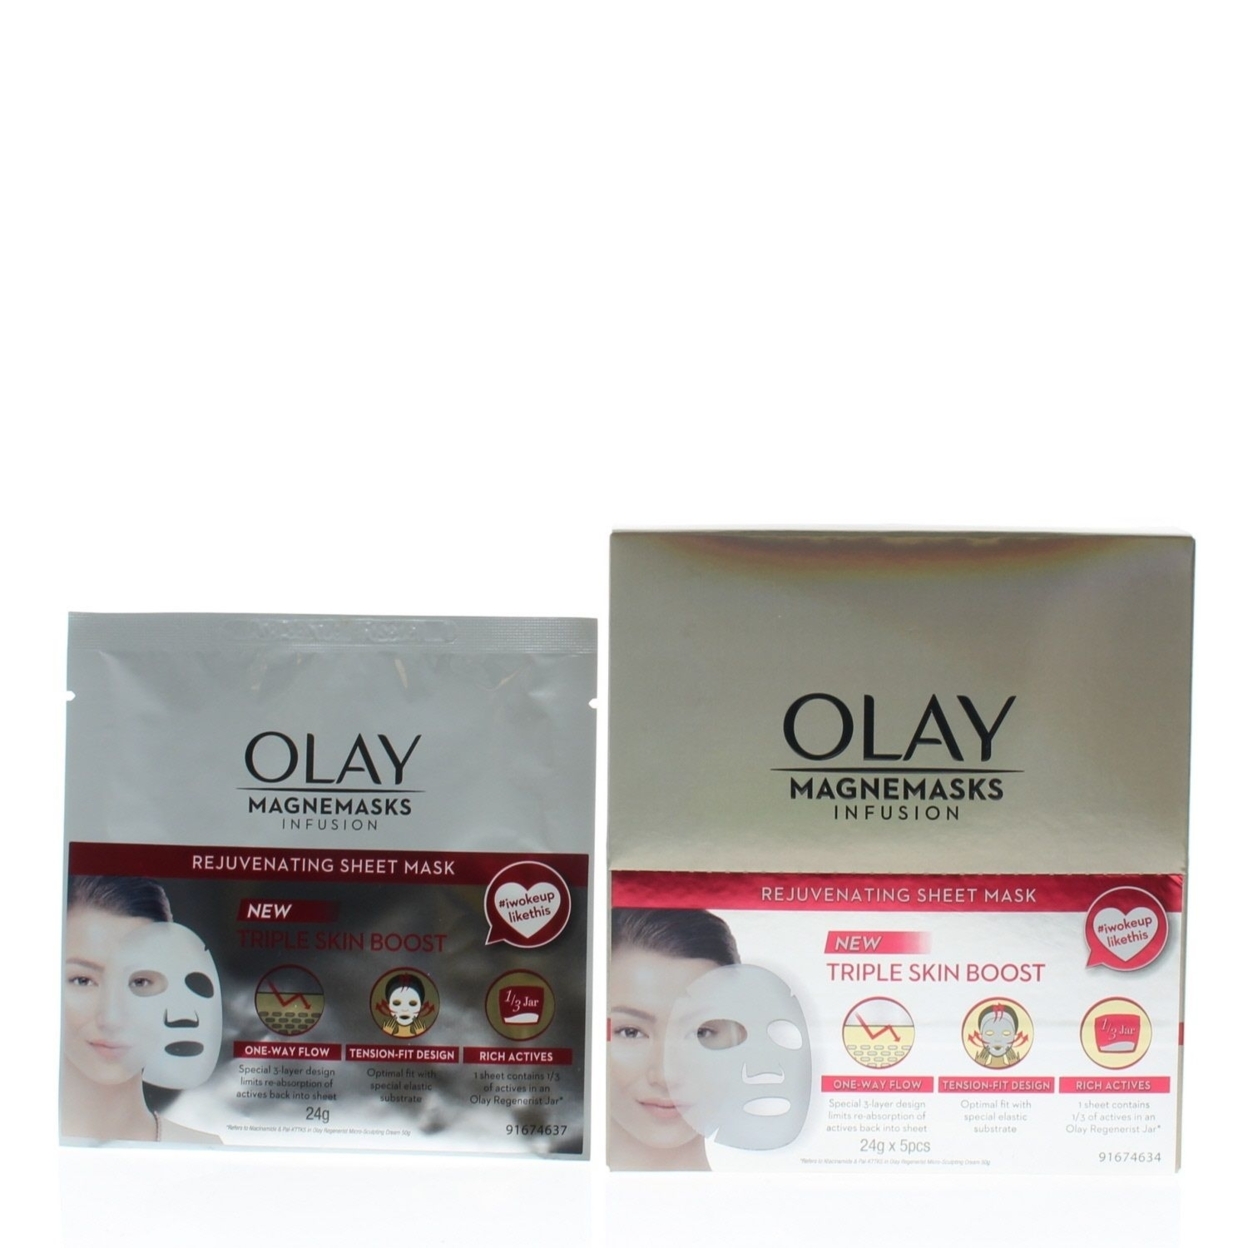 Olay Magnemasks Infusion Rejuvenating Sheet Mask - New Triple Skin Boost 5pcs X 24g